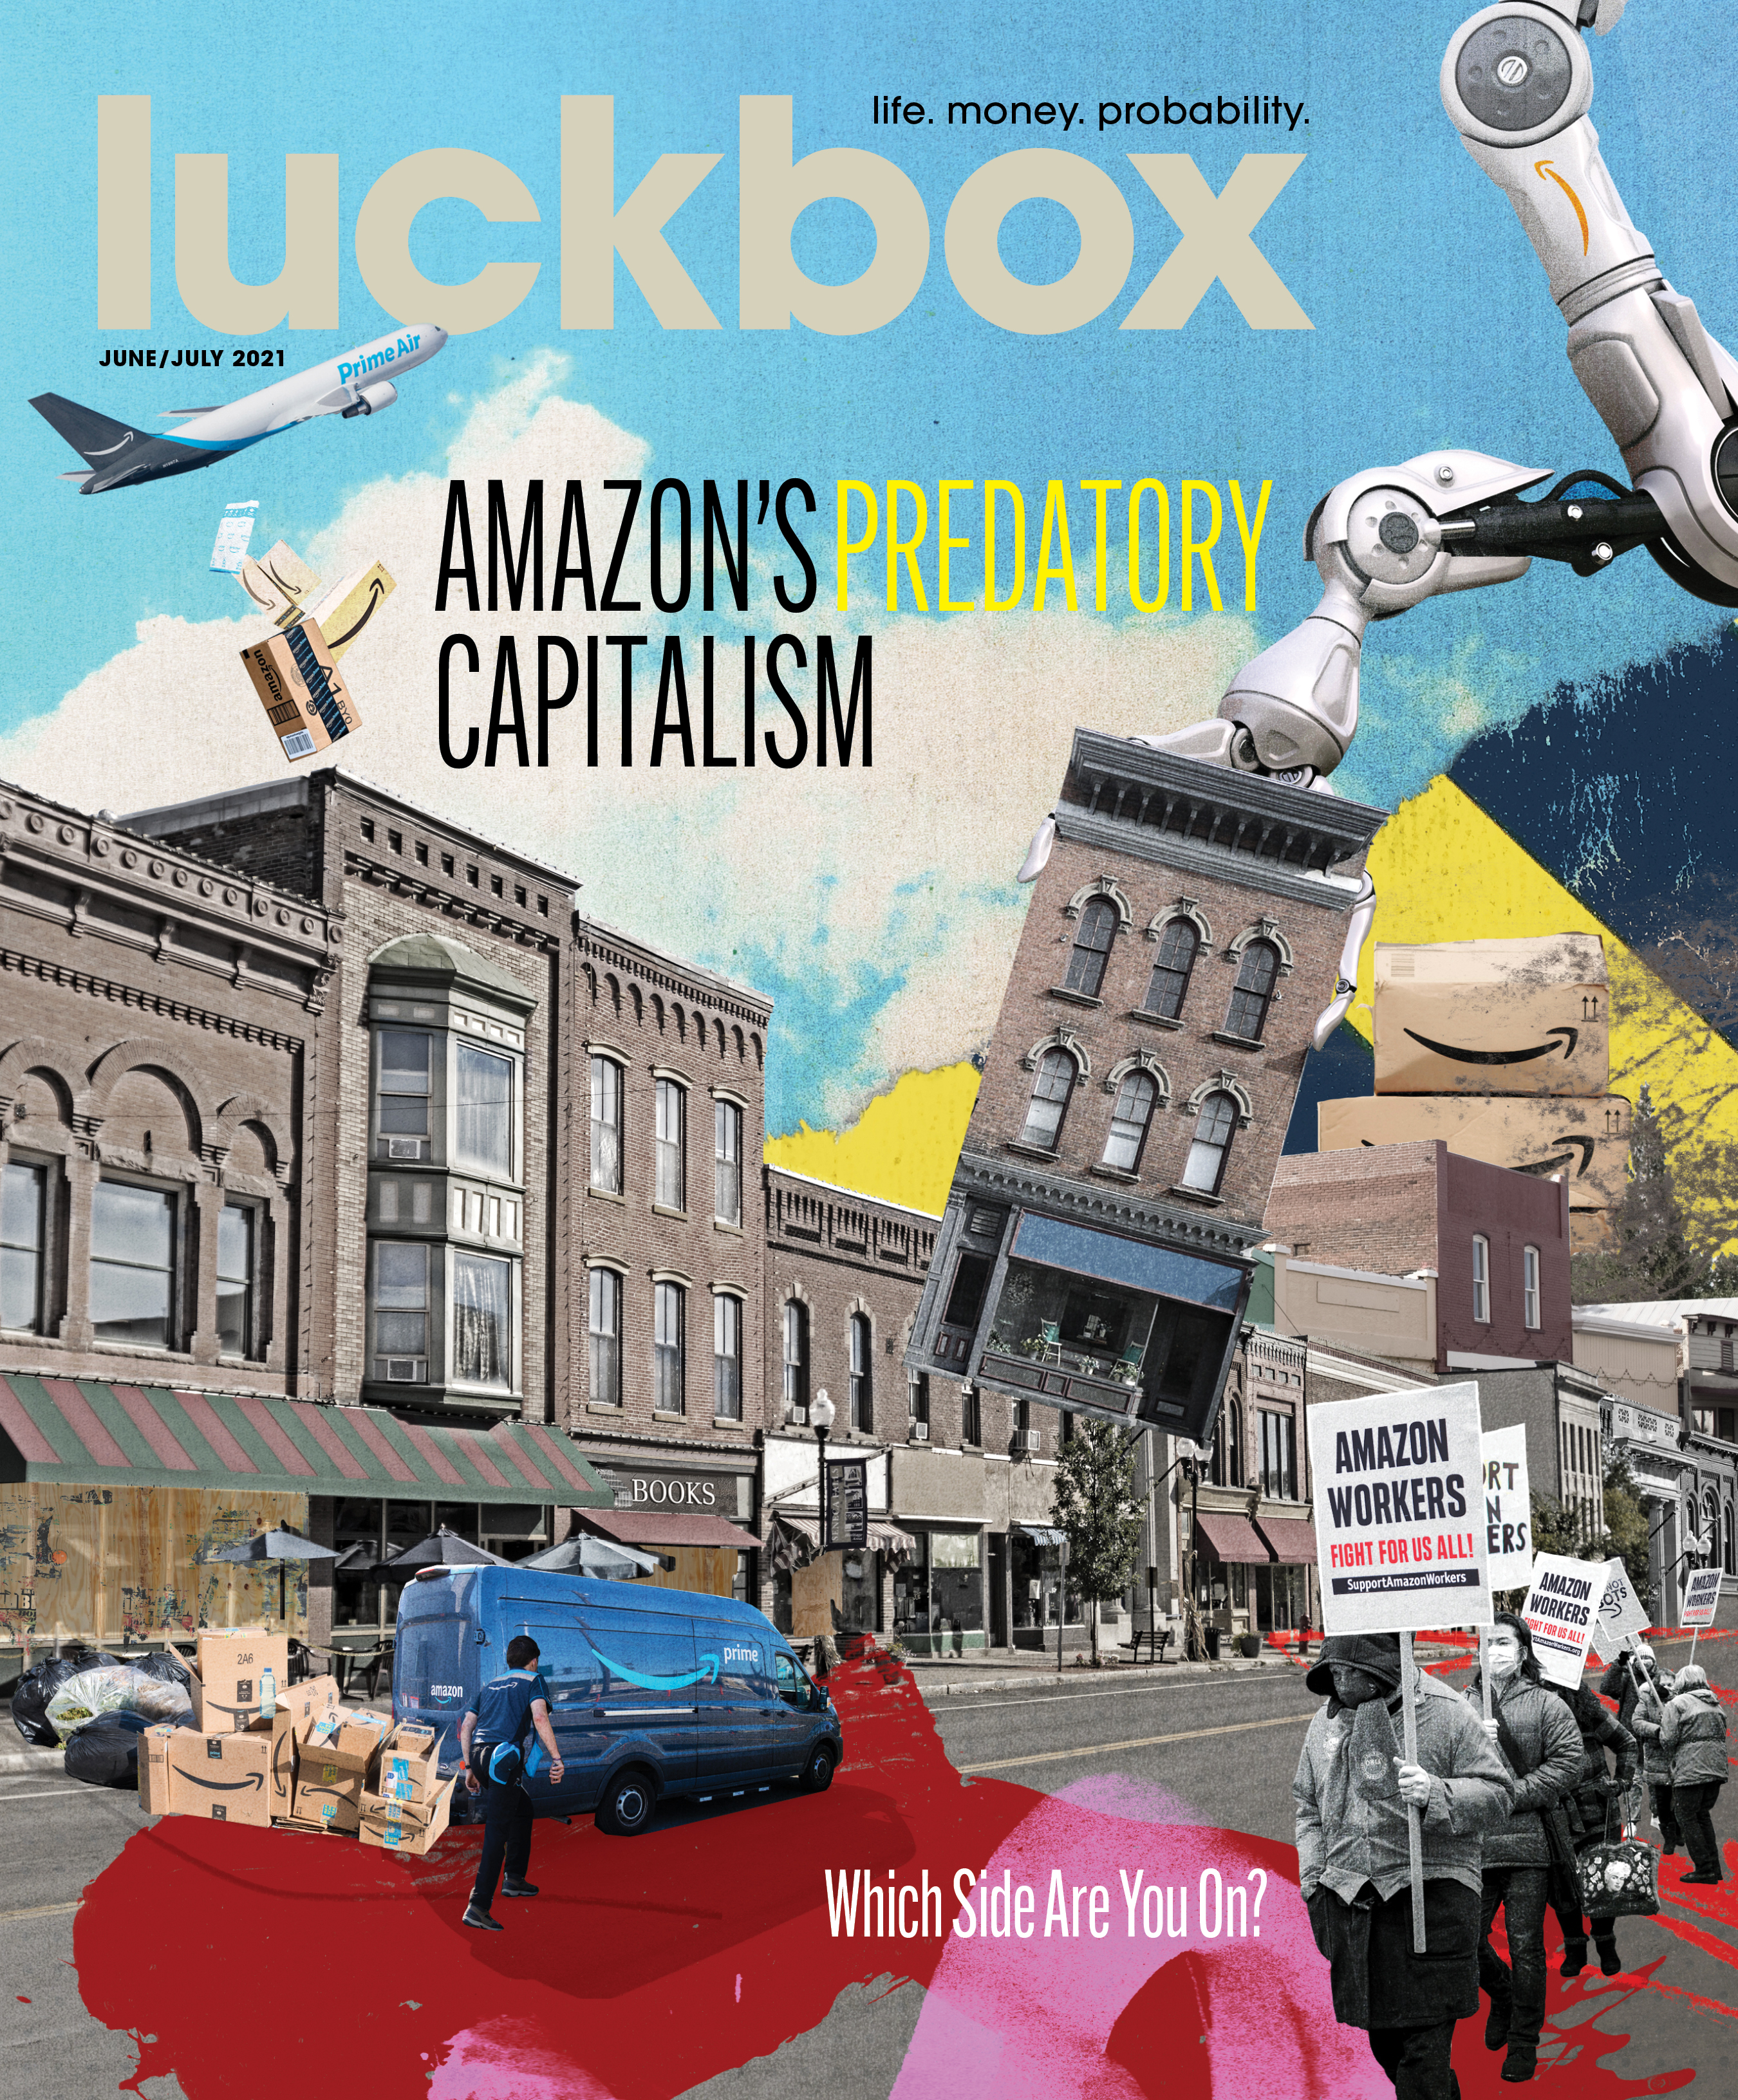 Luckbox - "Amazon's Predatory Capitalism," June/July 2021